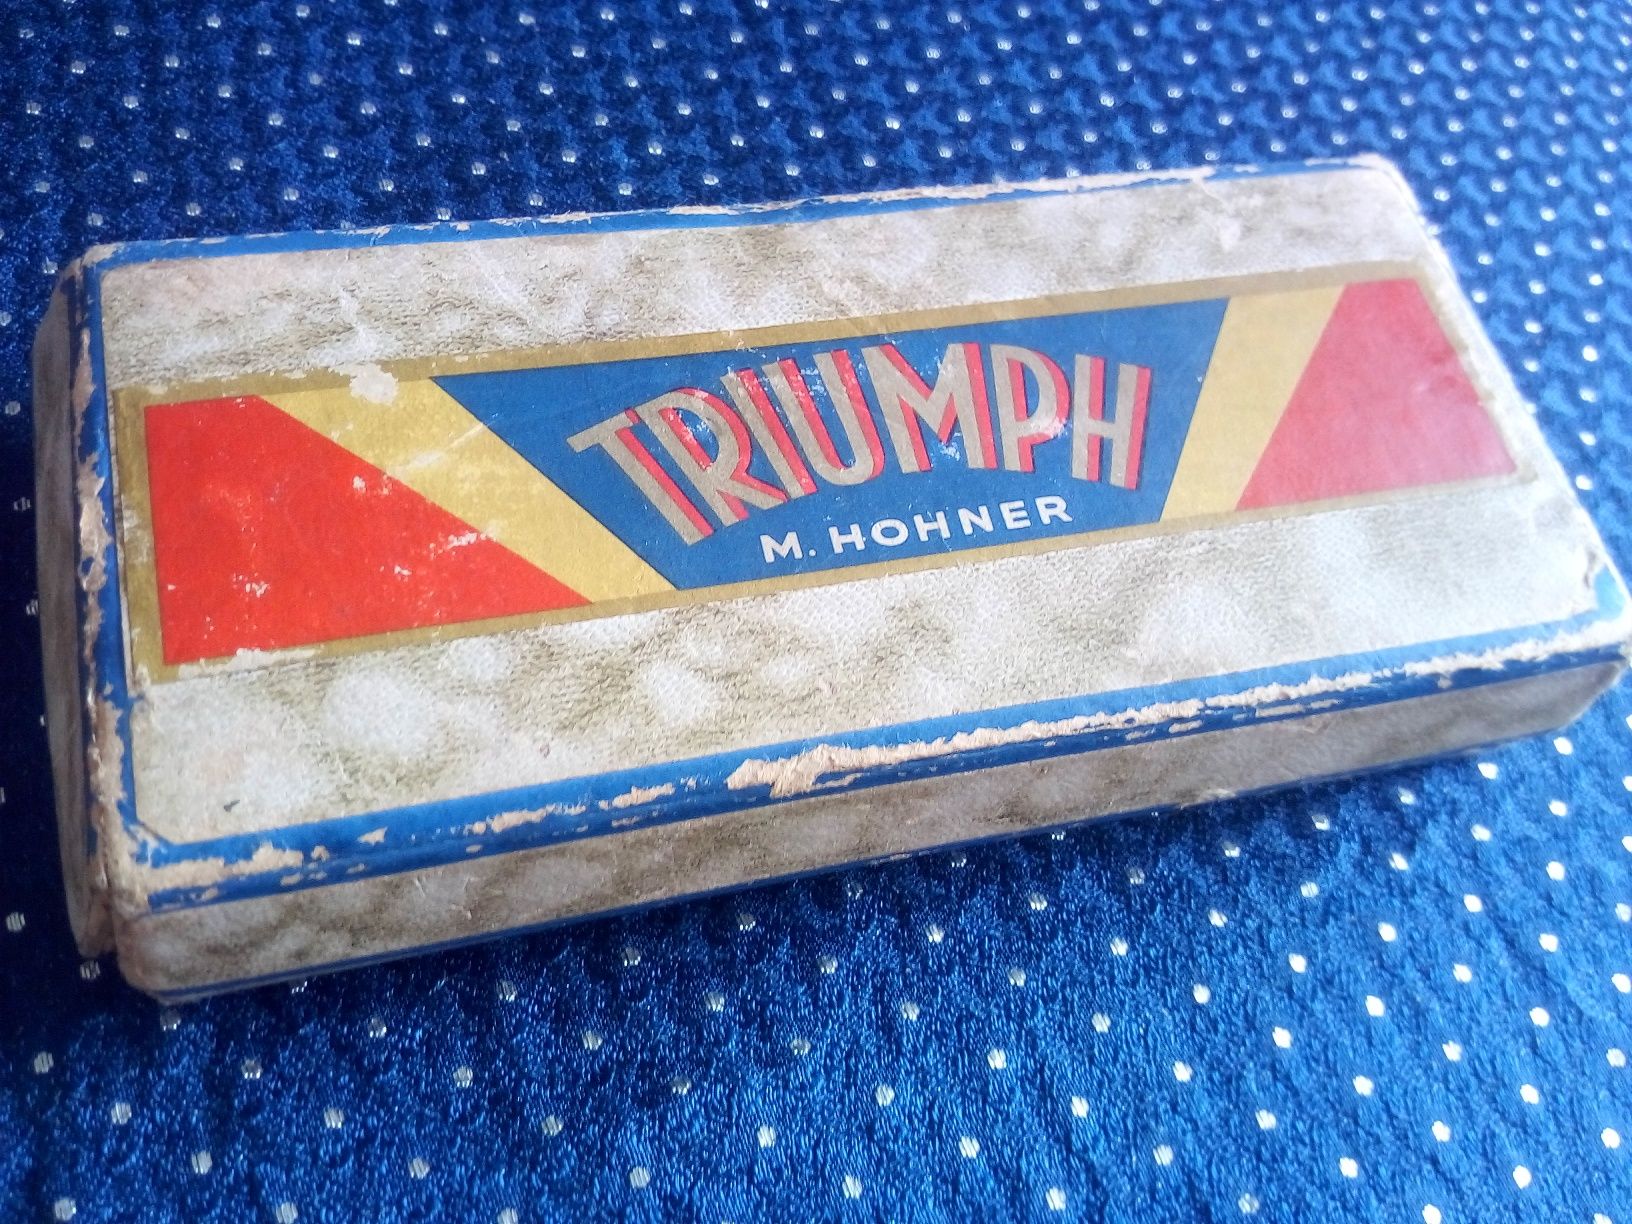 Armonica Triumph M. Hohner